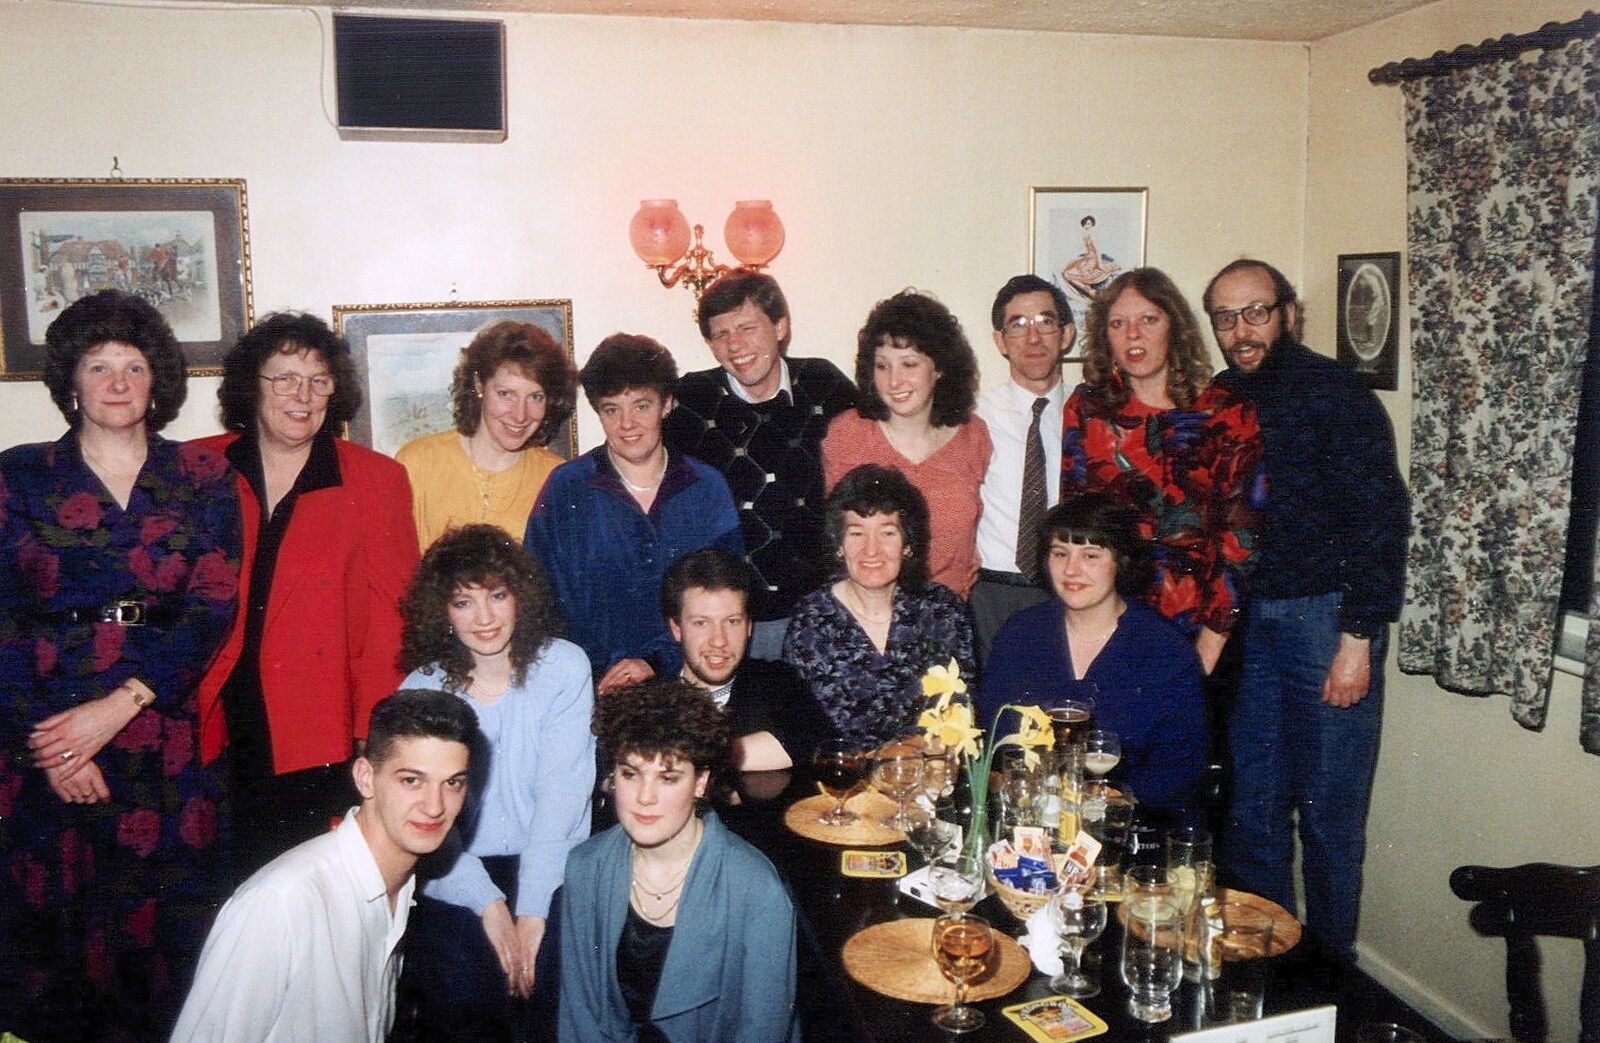 BPCC Printec Reunion at The Brome Swan, Suffolk - 20th February 1991: Printec group photo